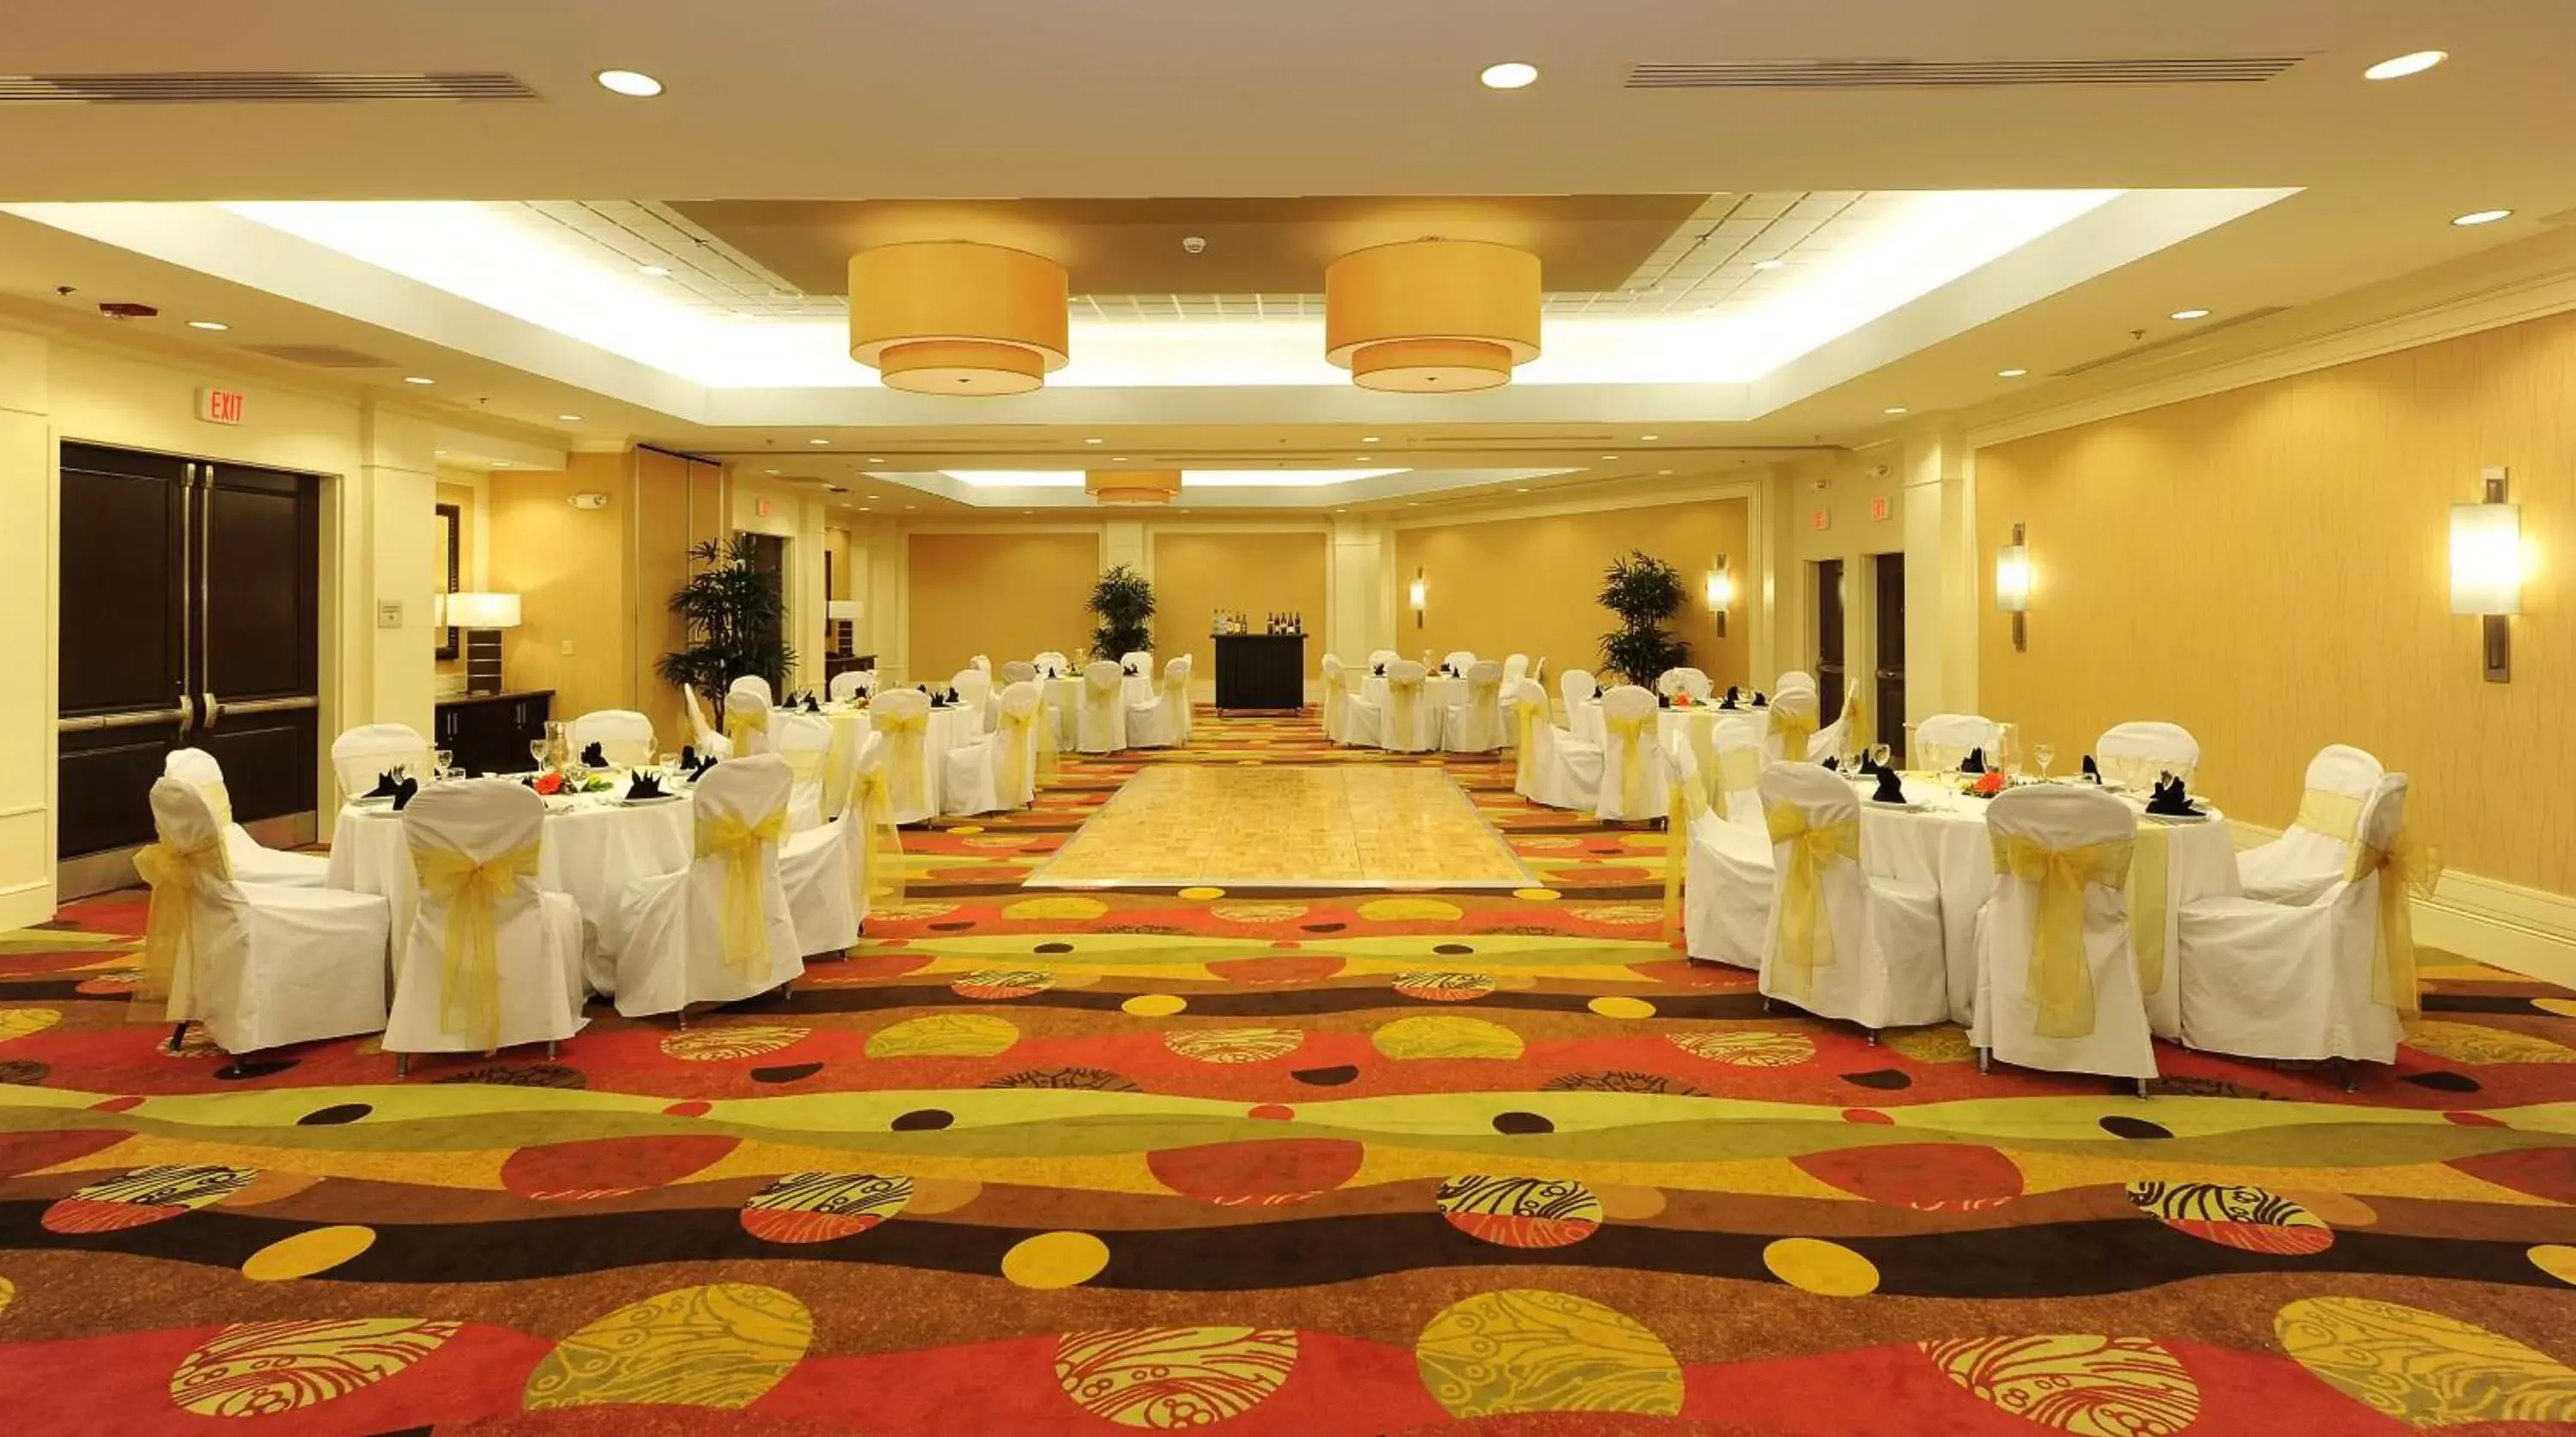 Meeting/conference room, Banquet Facilities in Hilton Garden Inn Columbia/Northeast